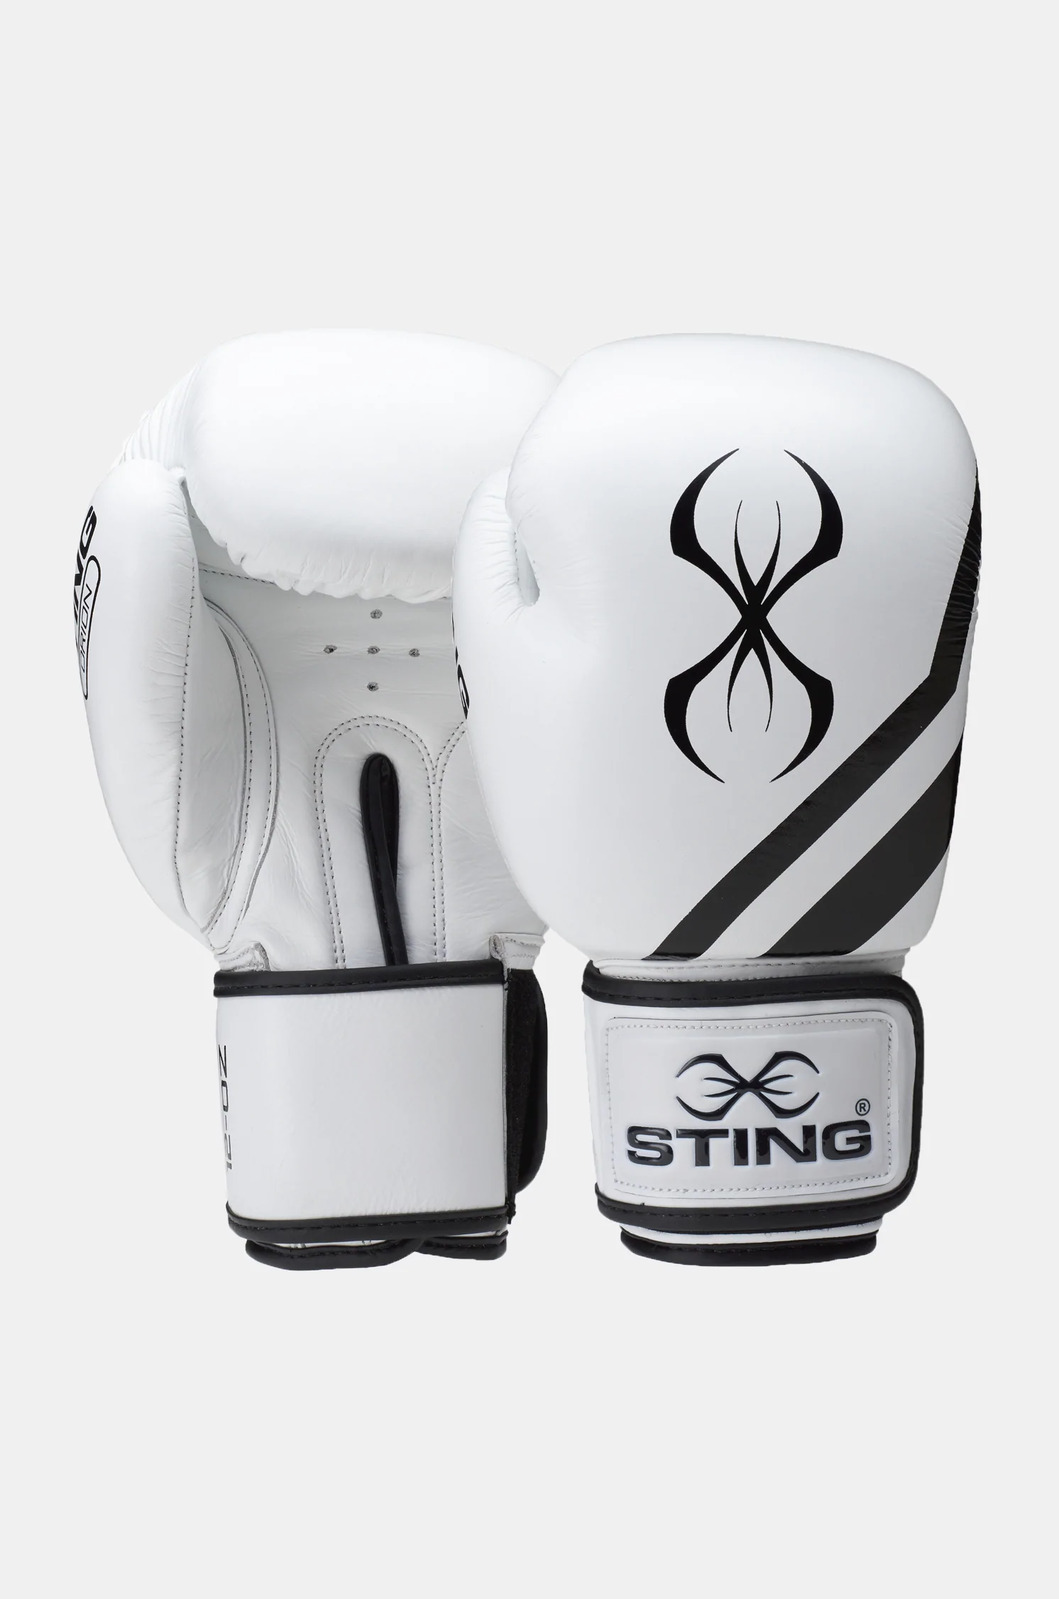 STING - Orion Training Glove - White/Black - 16oz